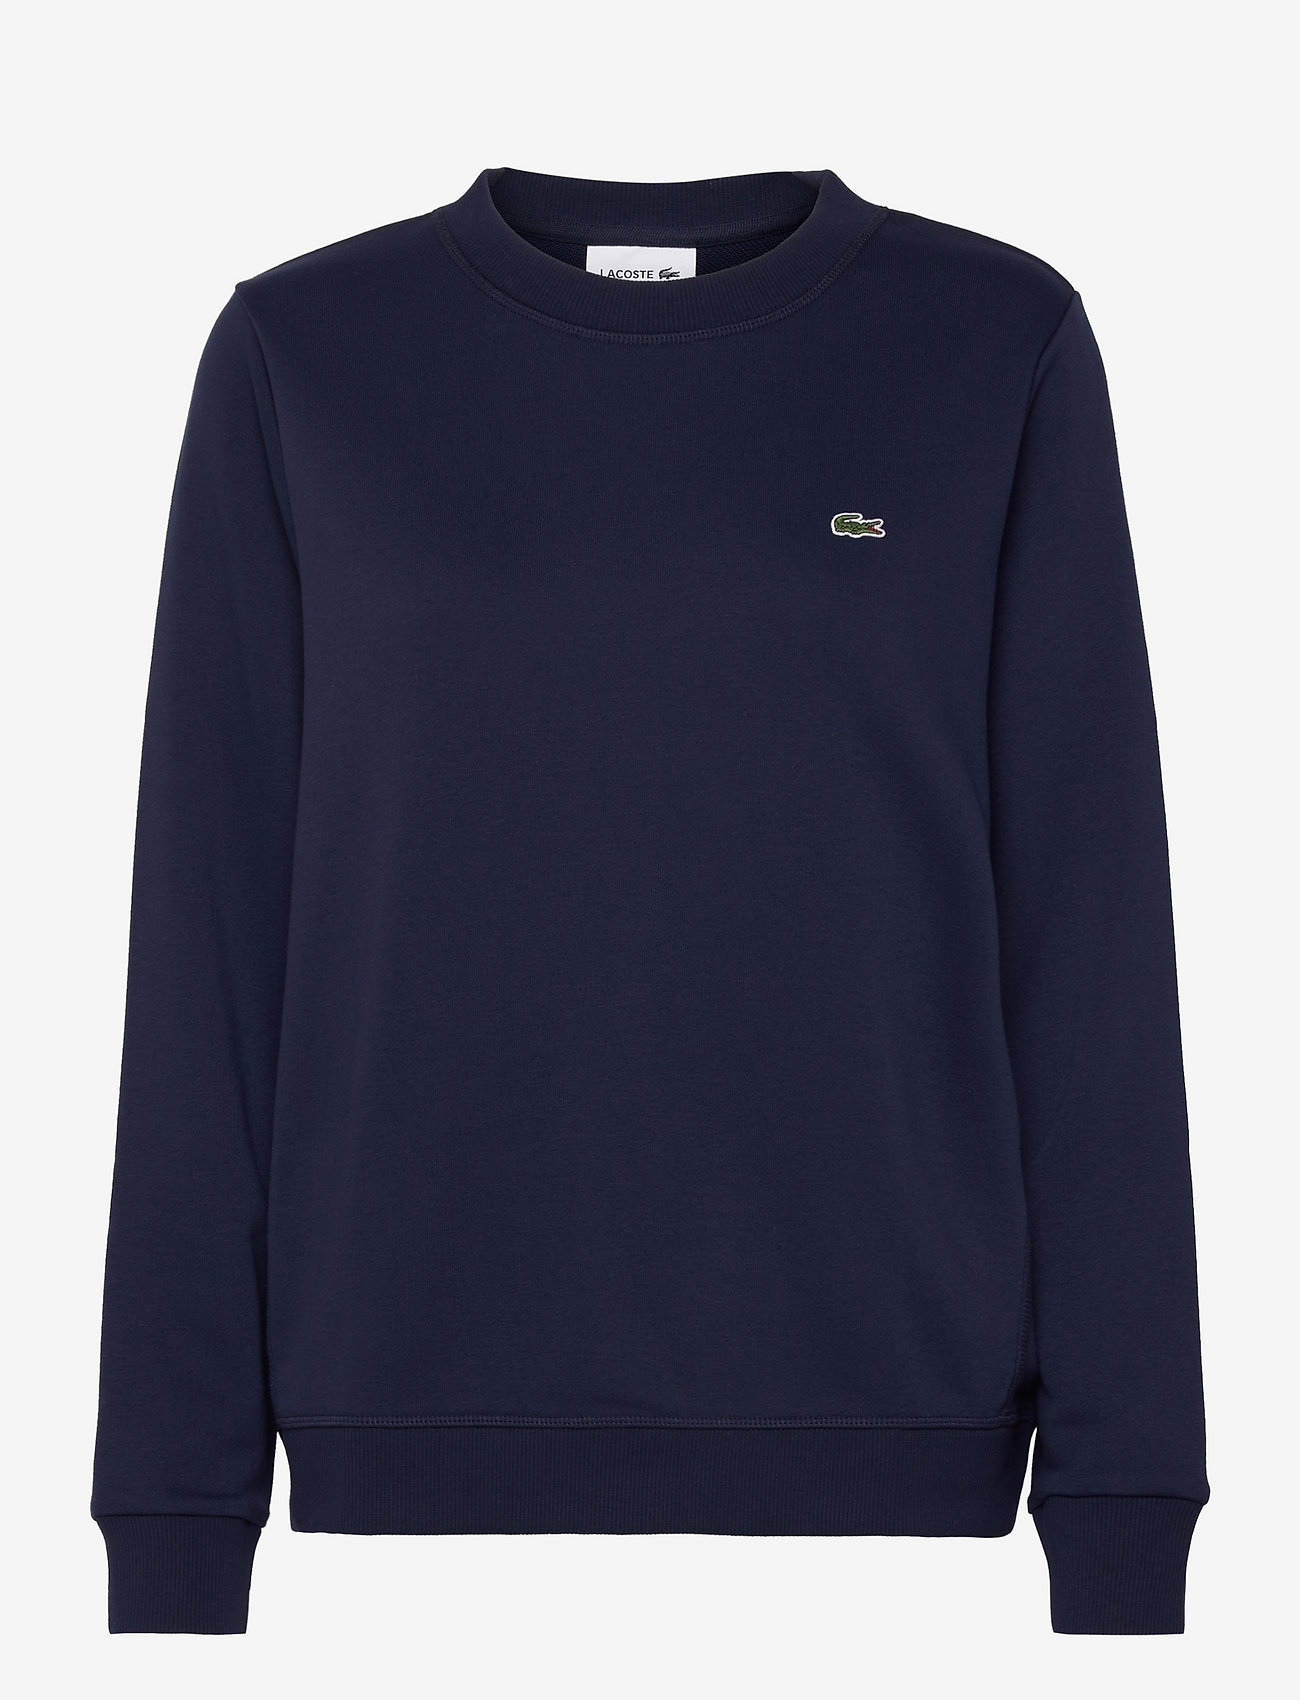 Lacoste - SWEATSHIRTS - sweatshirts - navy blue - 0